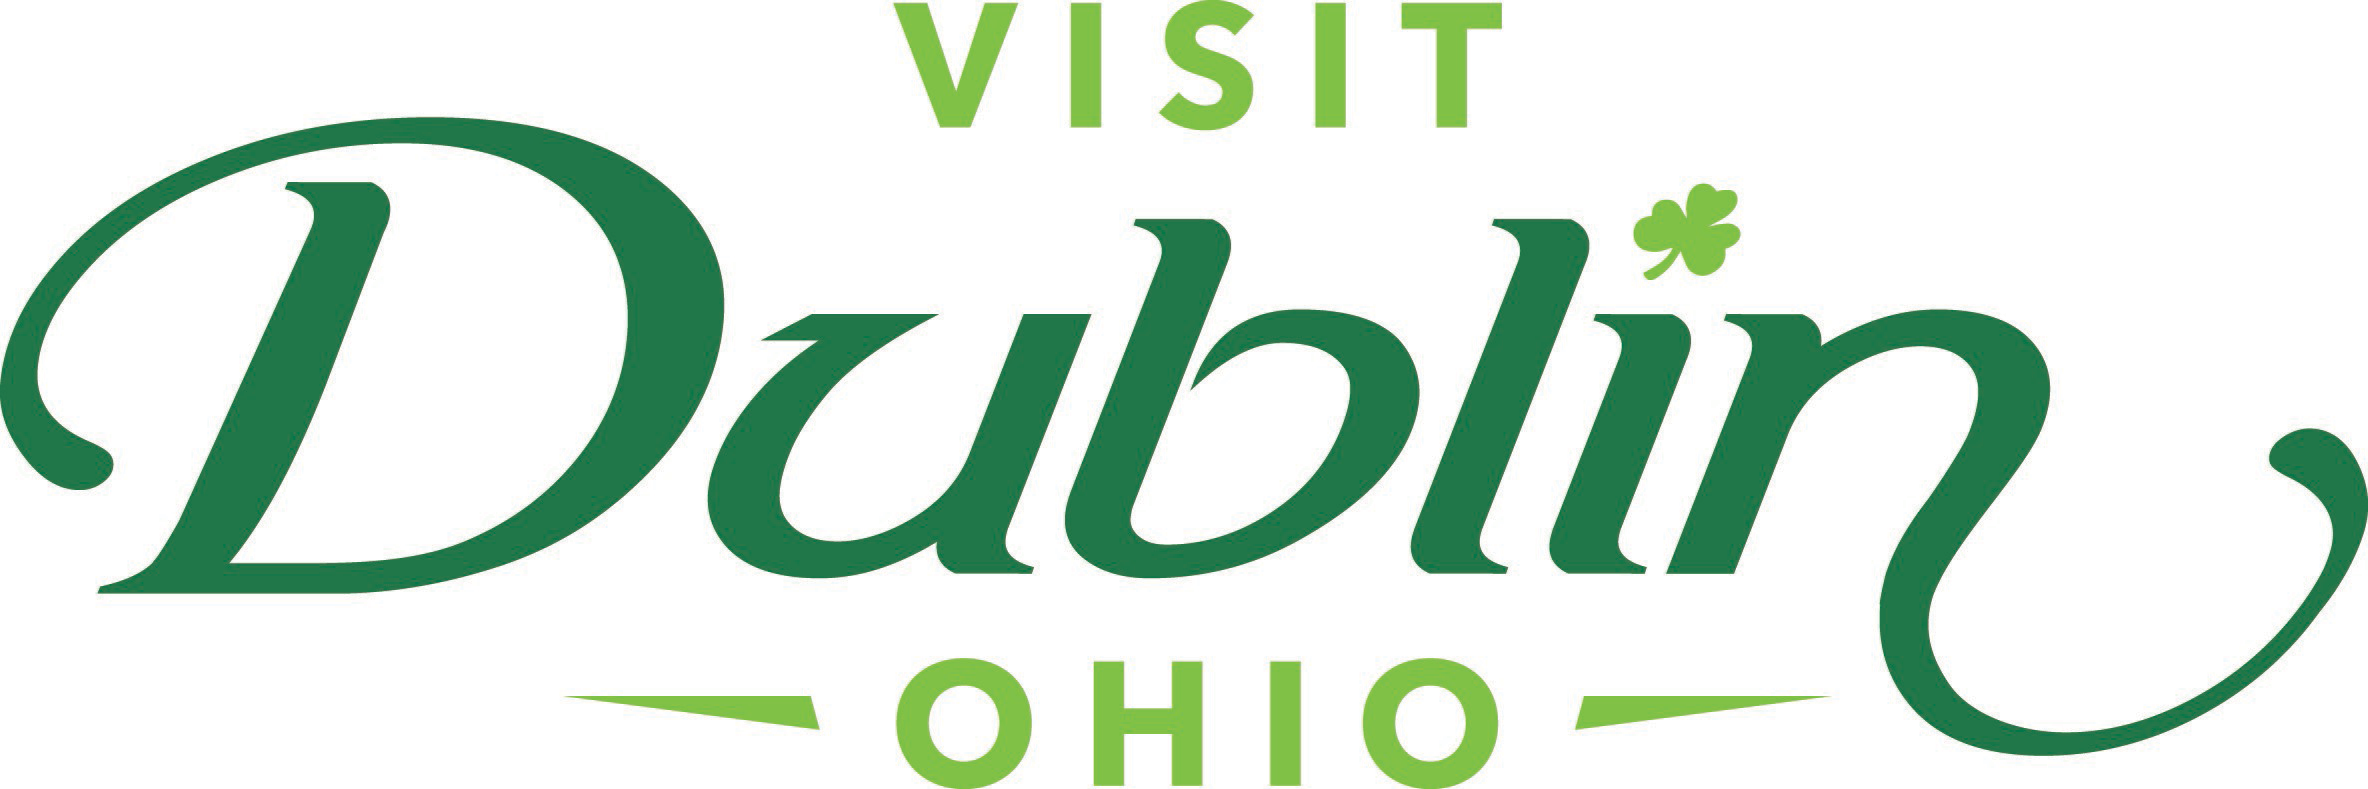 travel agency in dublin ohio